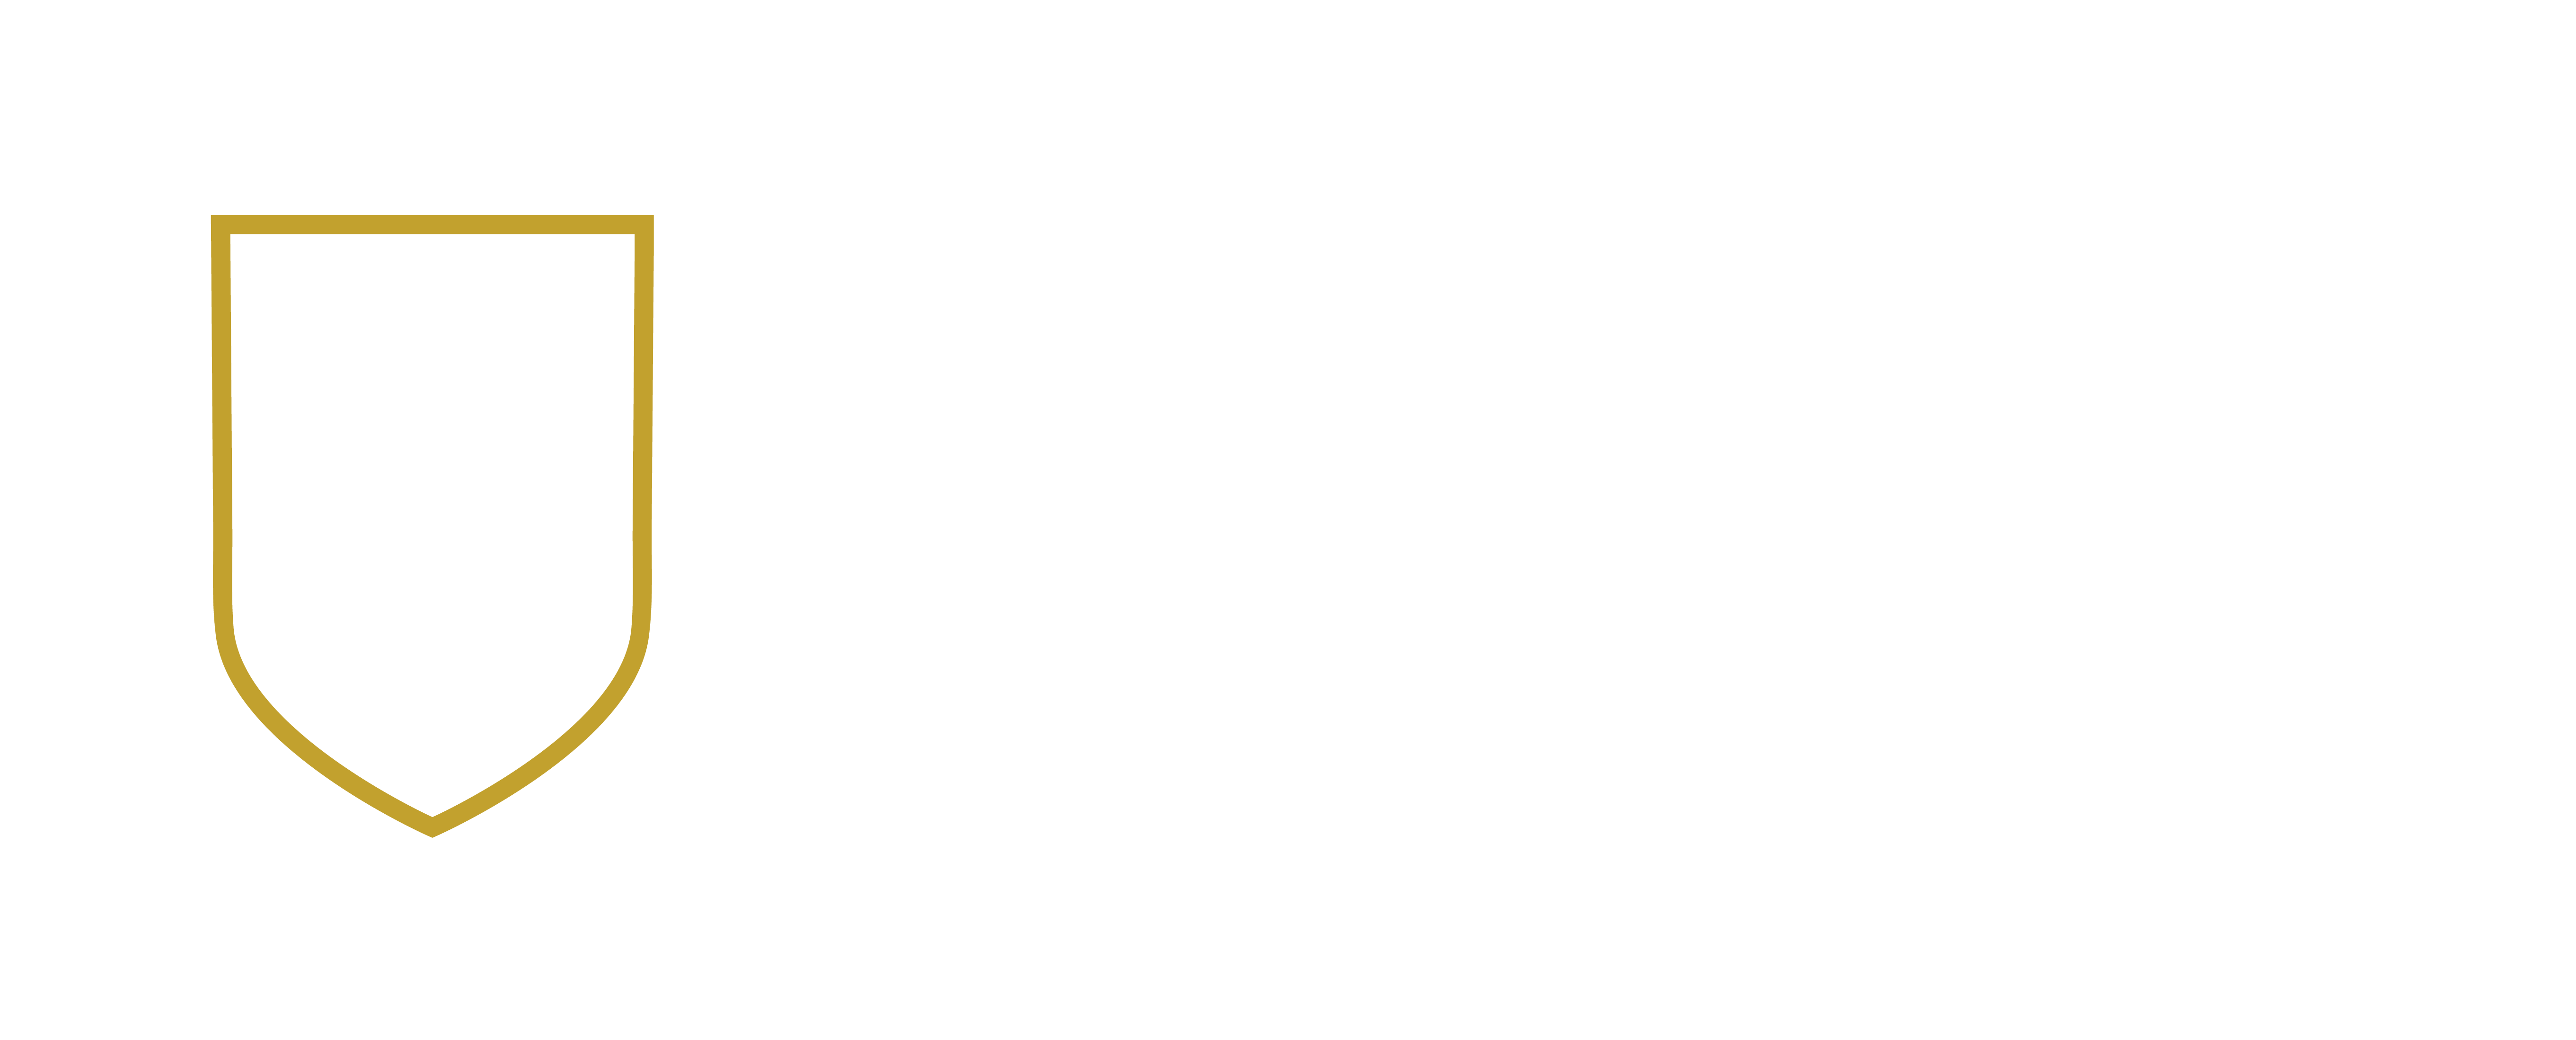 Taylor University Official Logo